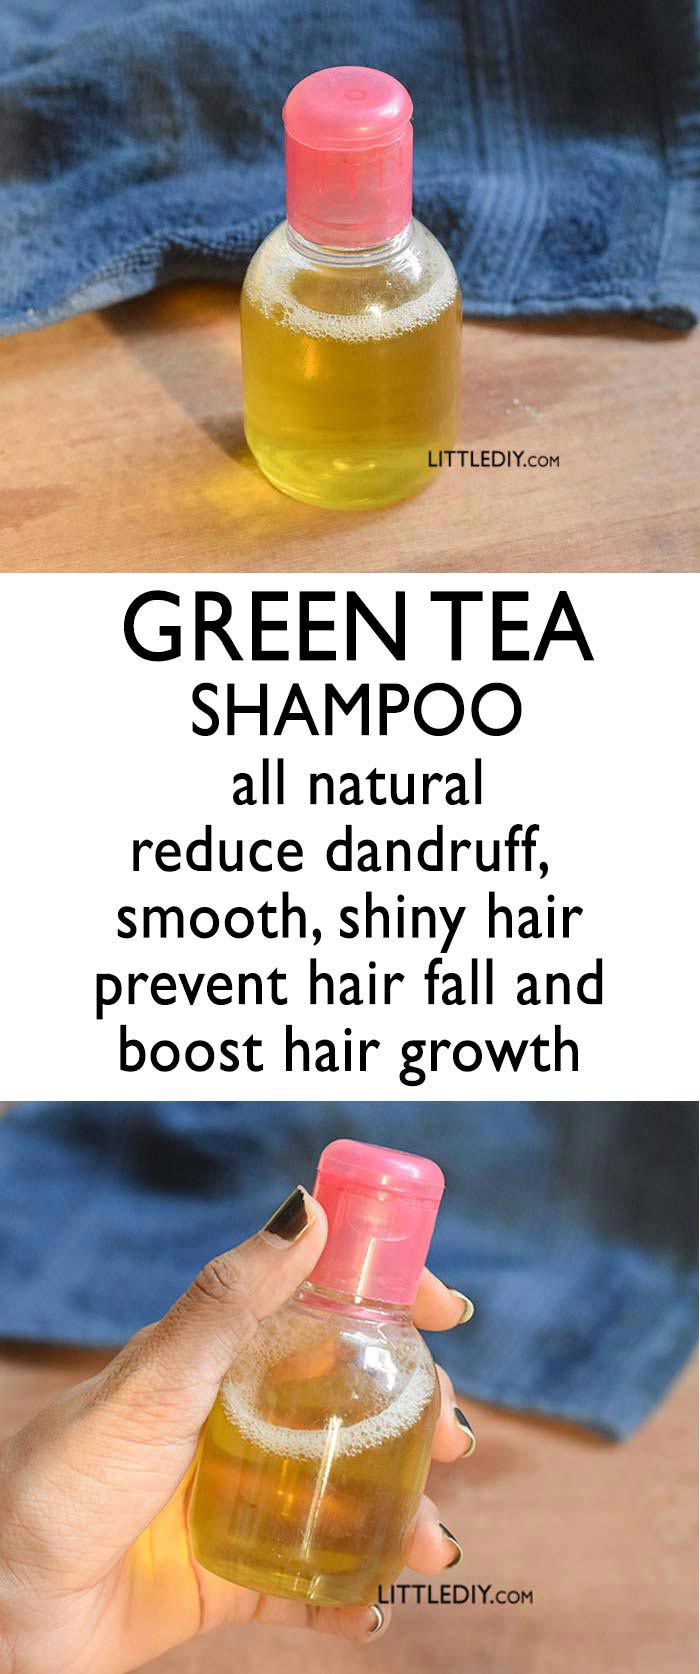 DIY Green Tea Shampoo for hair growth